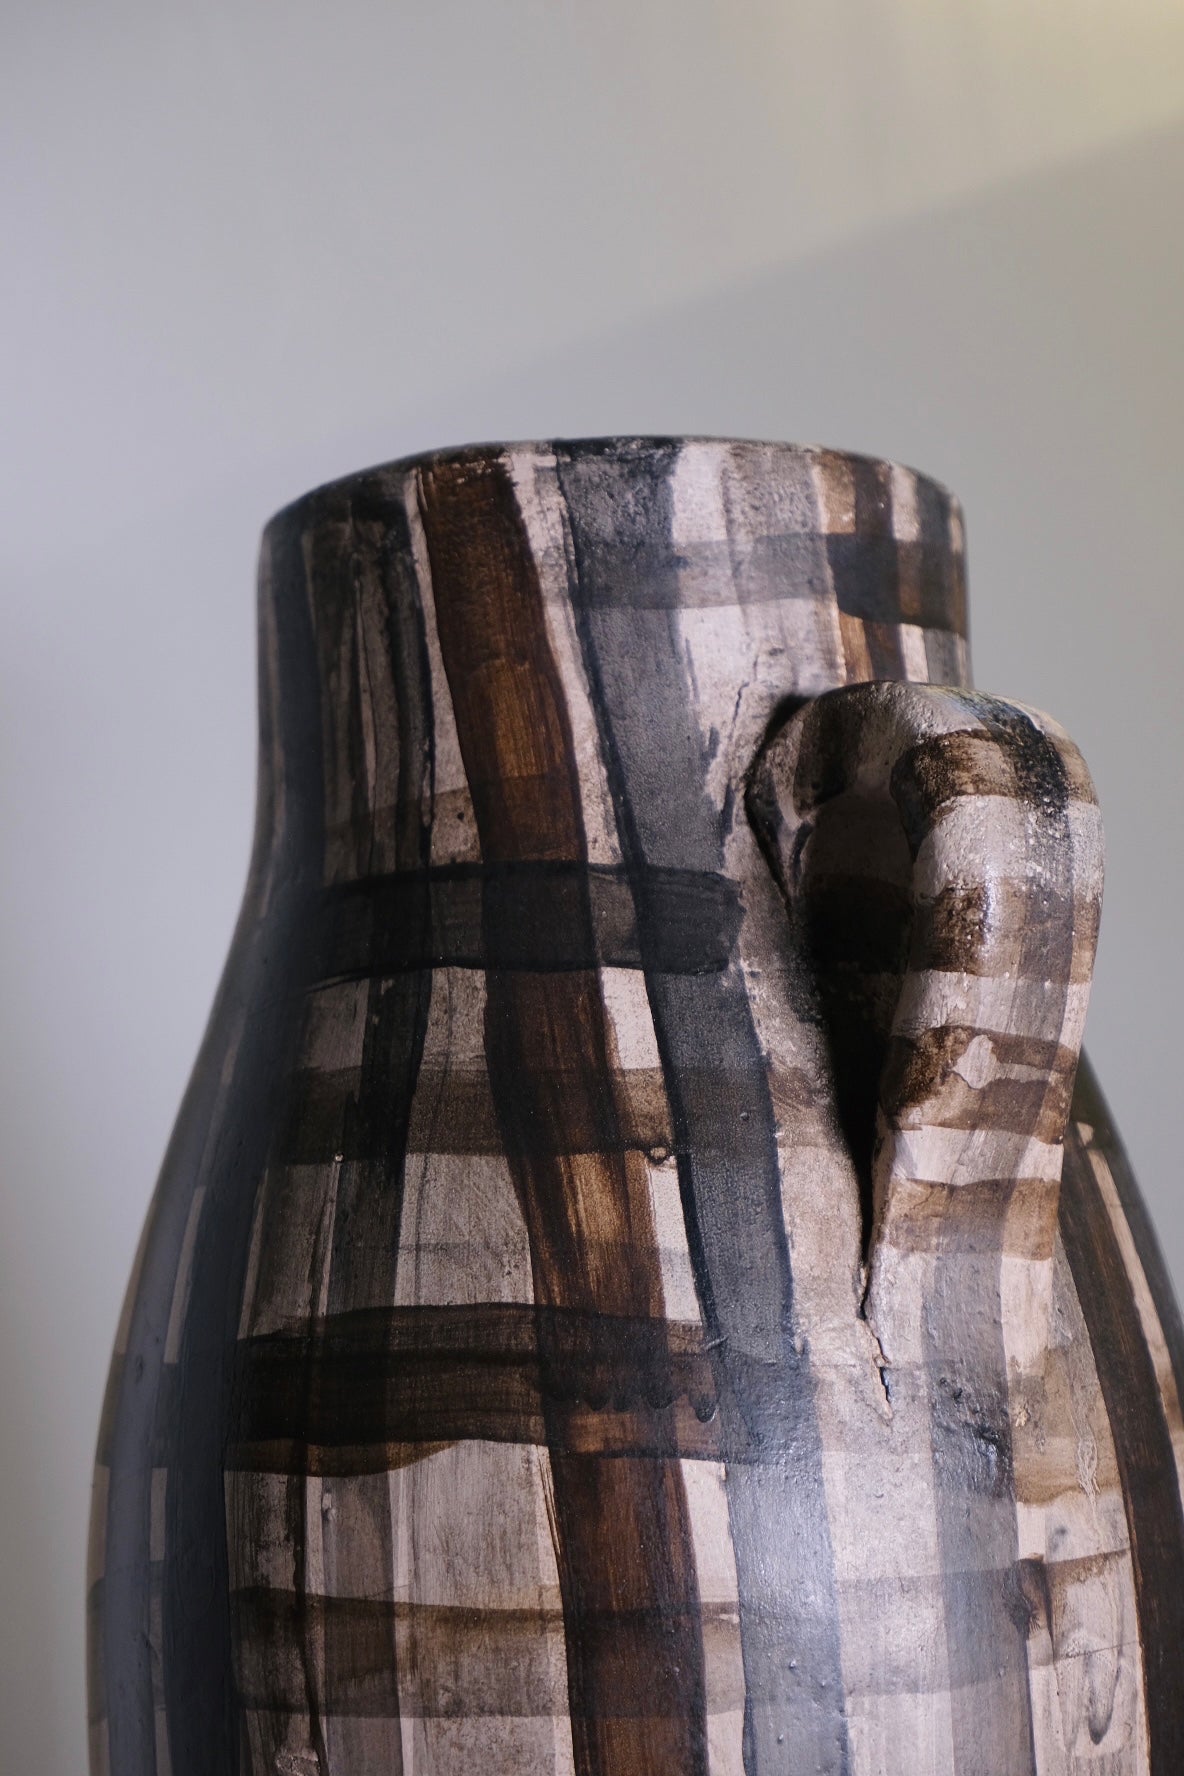 Grecian Style Plaid Tall Urn/Studio Pottery Vase